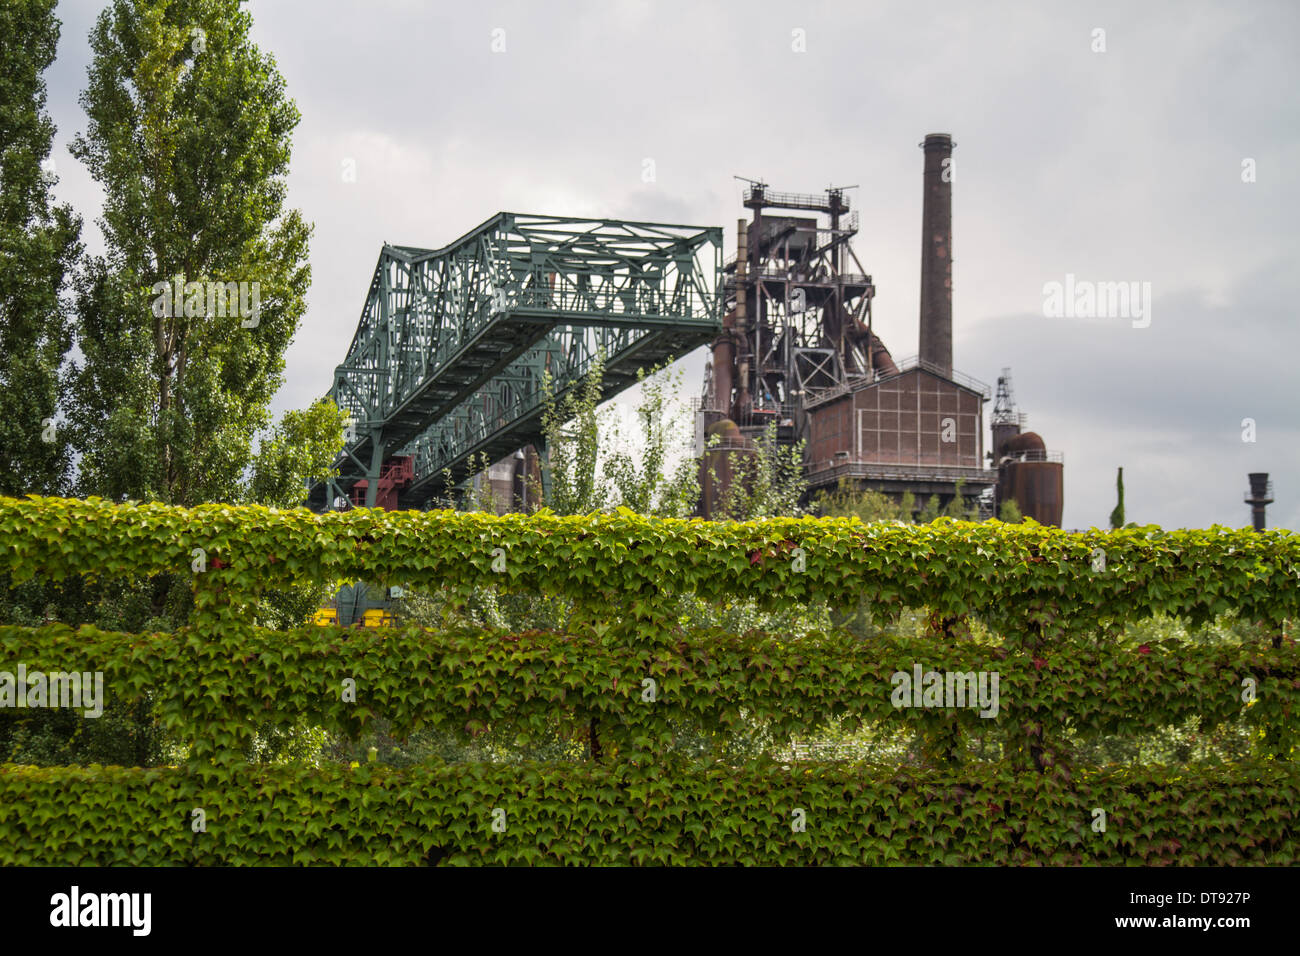 Landschaftpark Duisburg Nord Ivy overgrowing railings Stock Photo